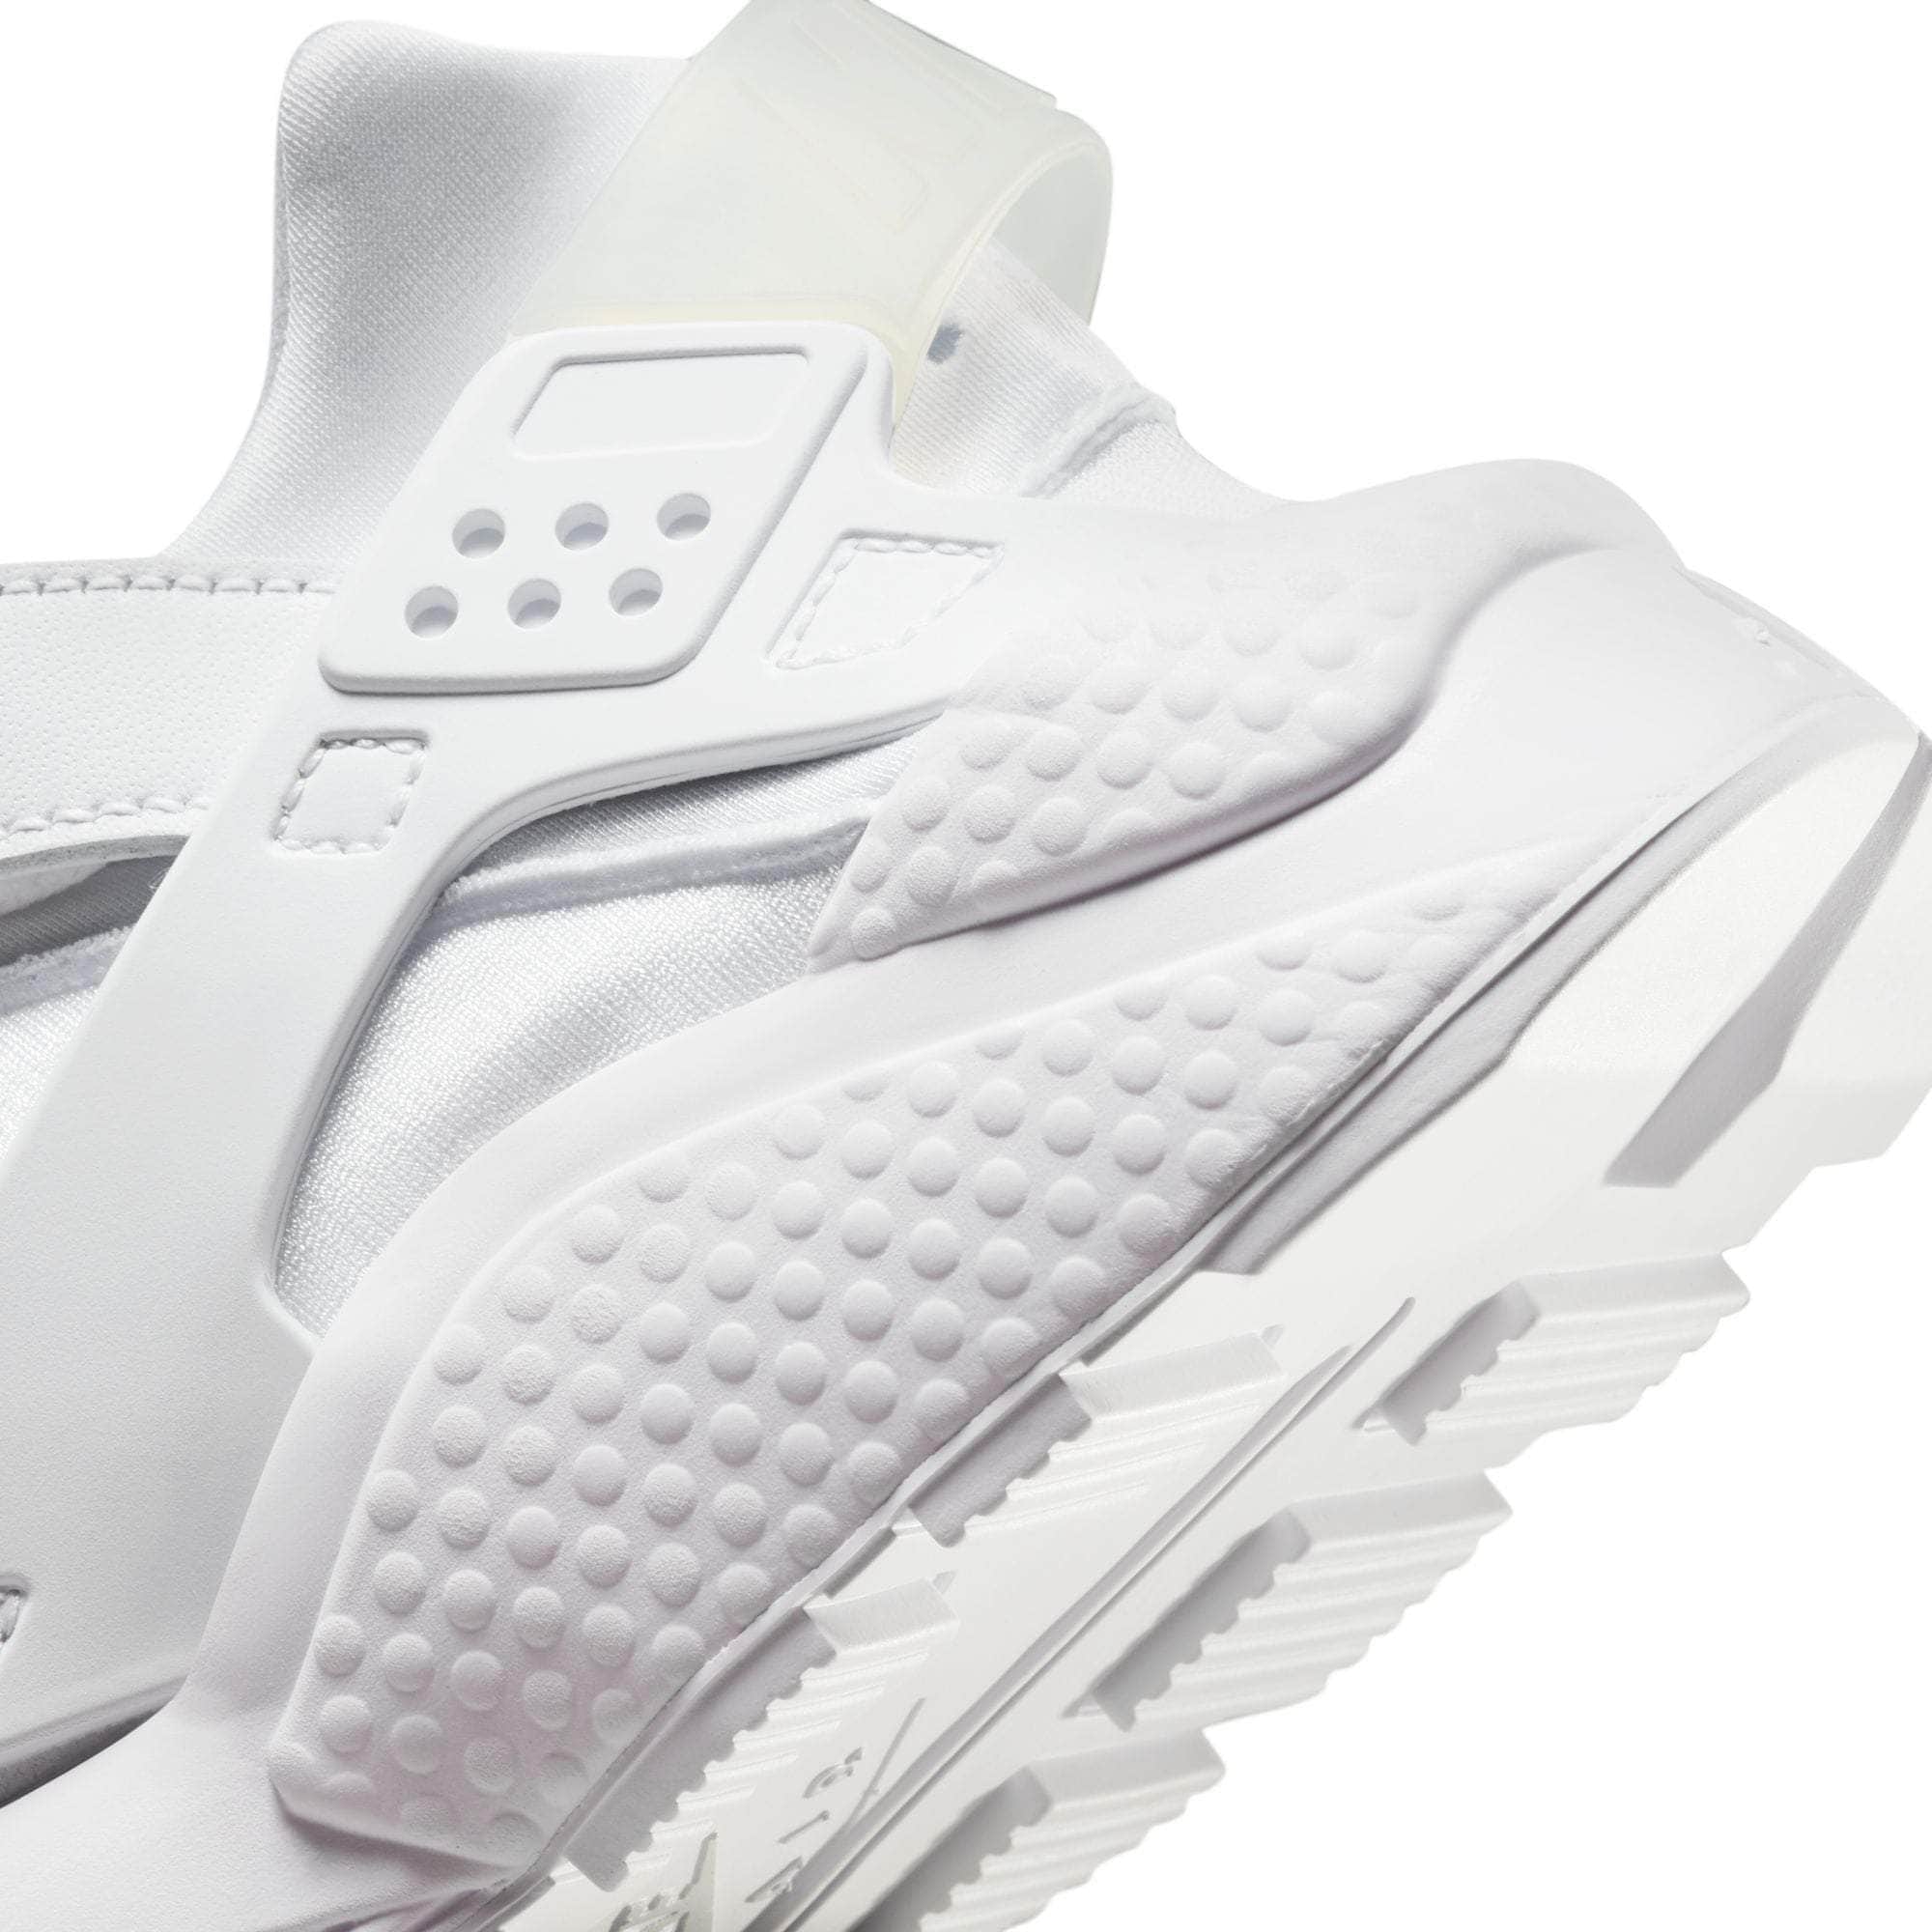 NIKE FOOTWEAR Nike Air Huarache "Triple White" - Women's